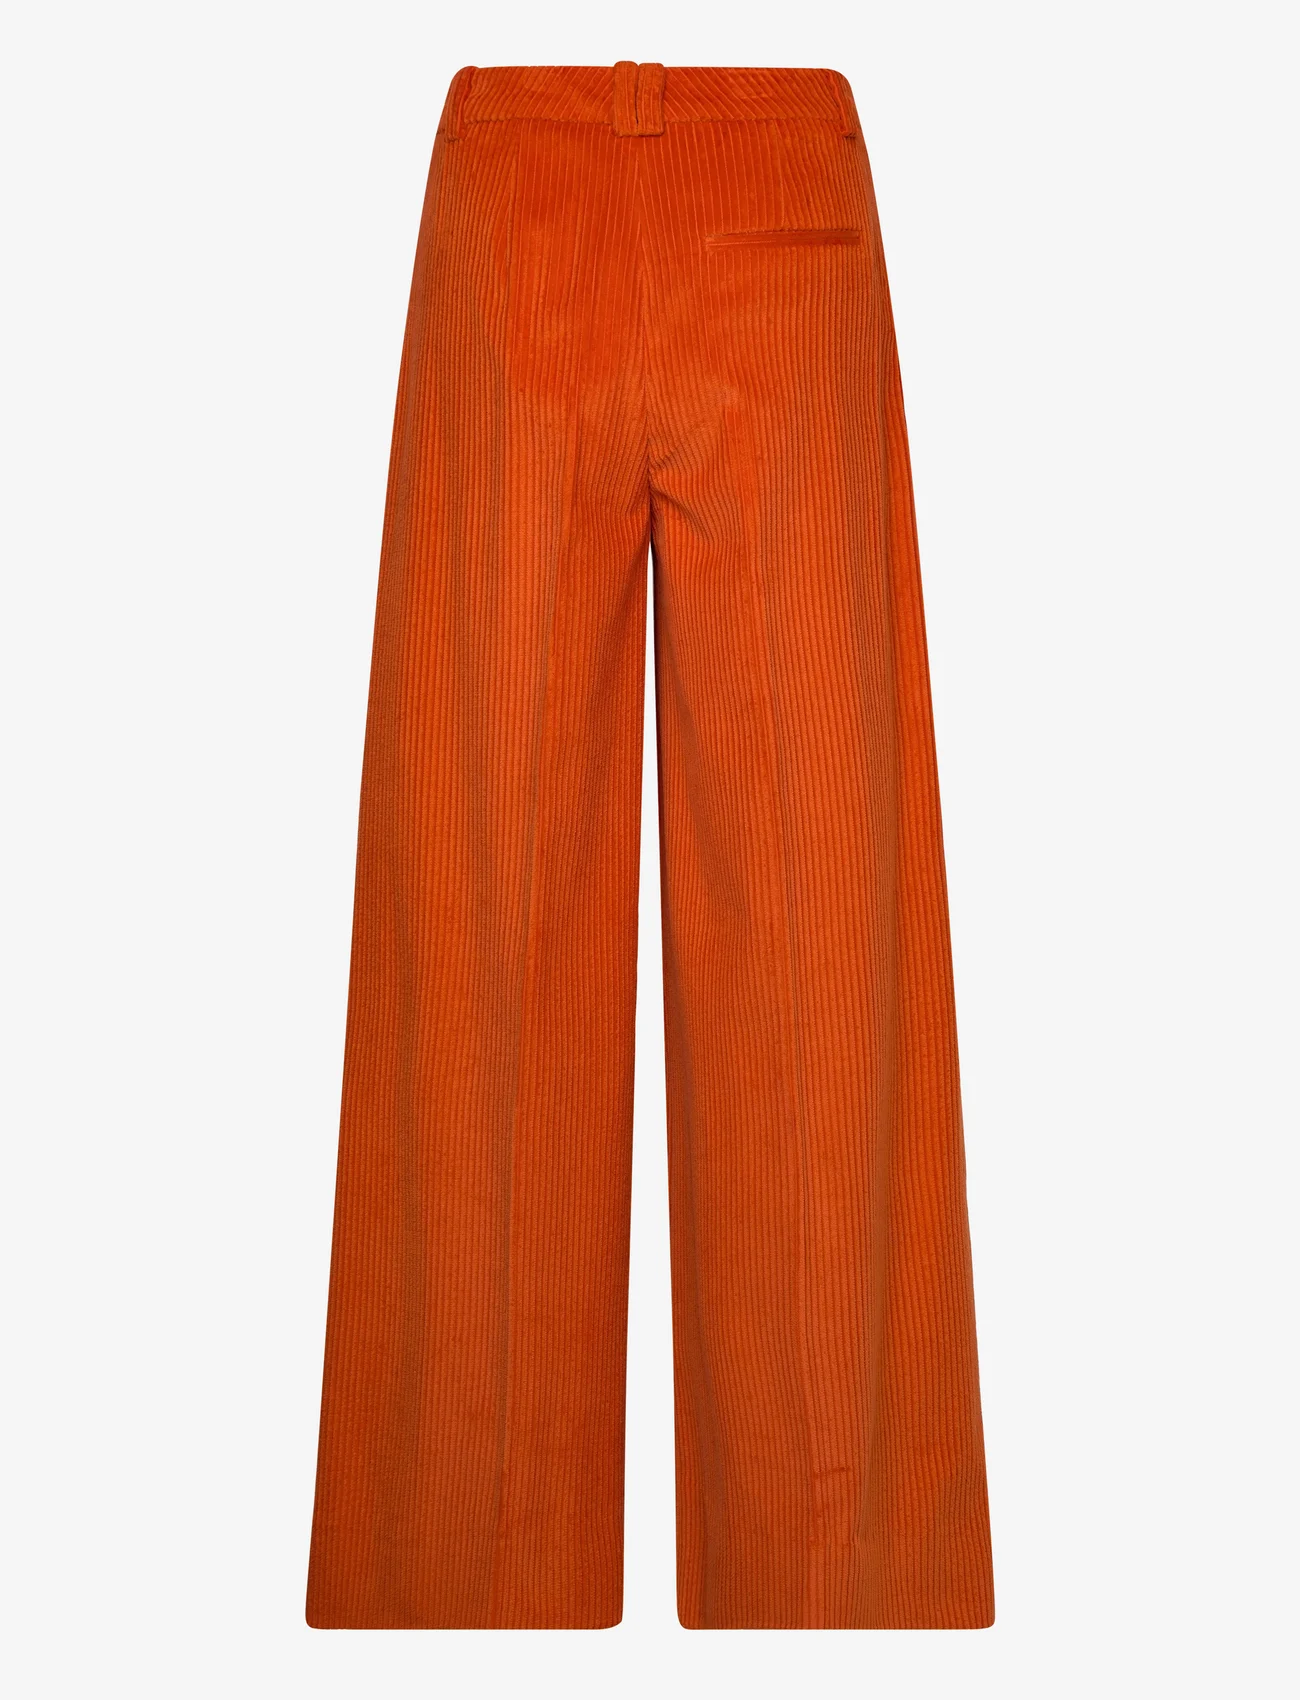 GANT - HW WIDE LEG CORD PANTS - brede jeans - pumpkin orange - 1